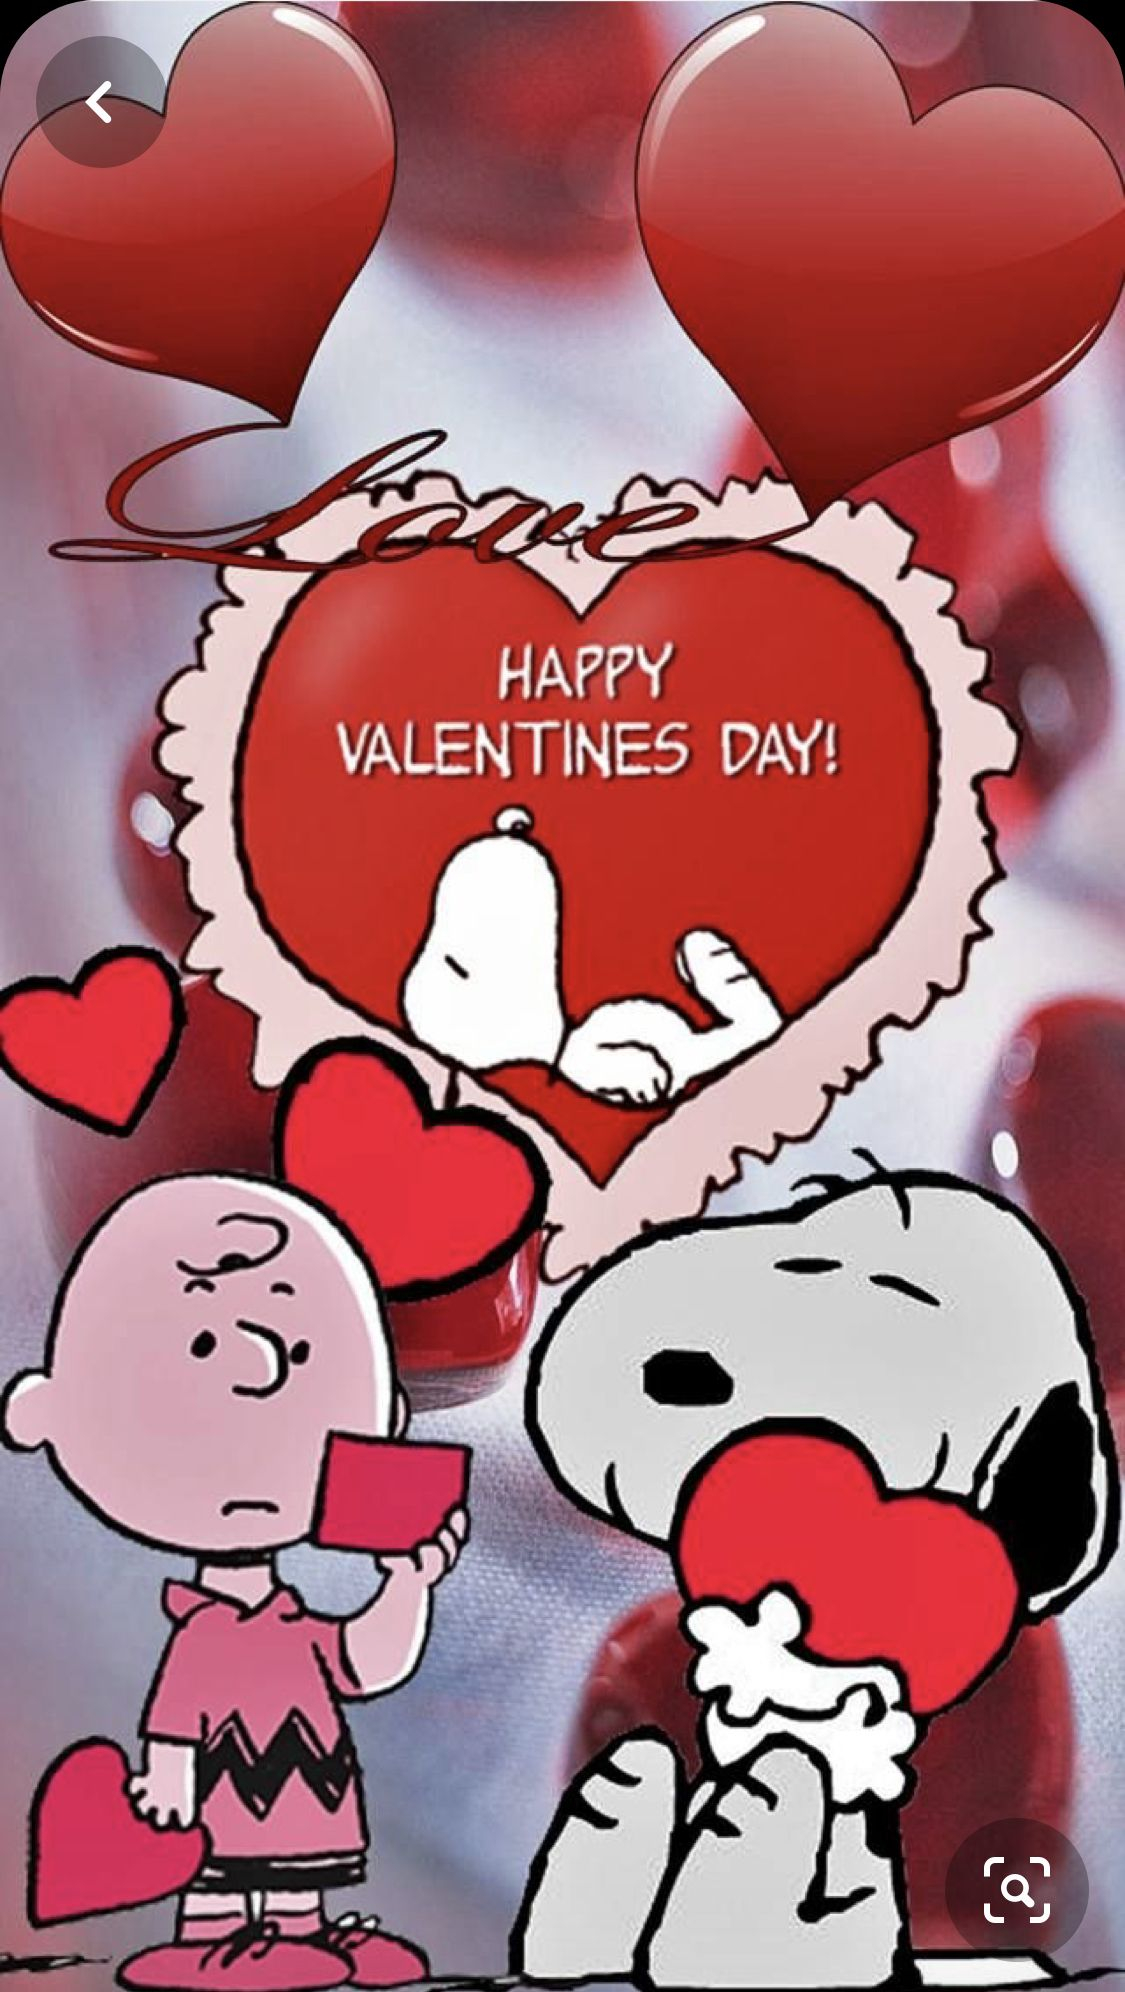 1125x1992 Pin by Corinna on Snoopy | Snoopy valentine, Snoopy valentine's day, Happy valentine